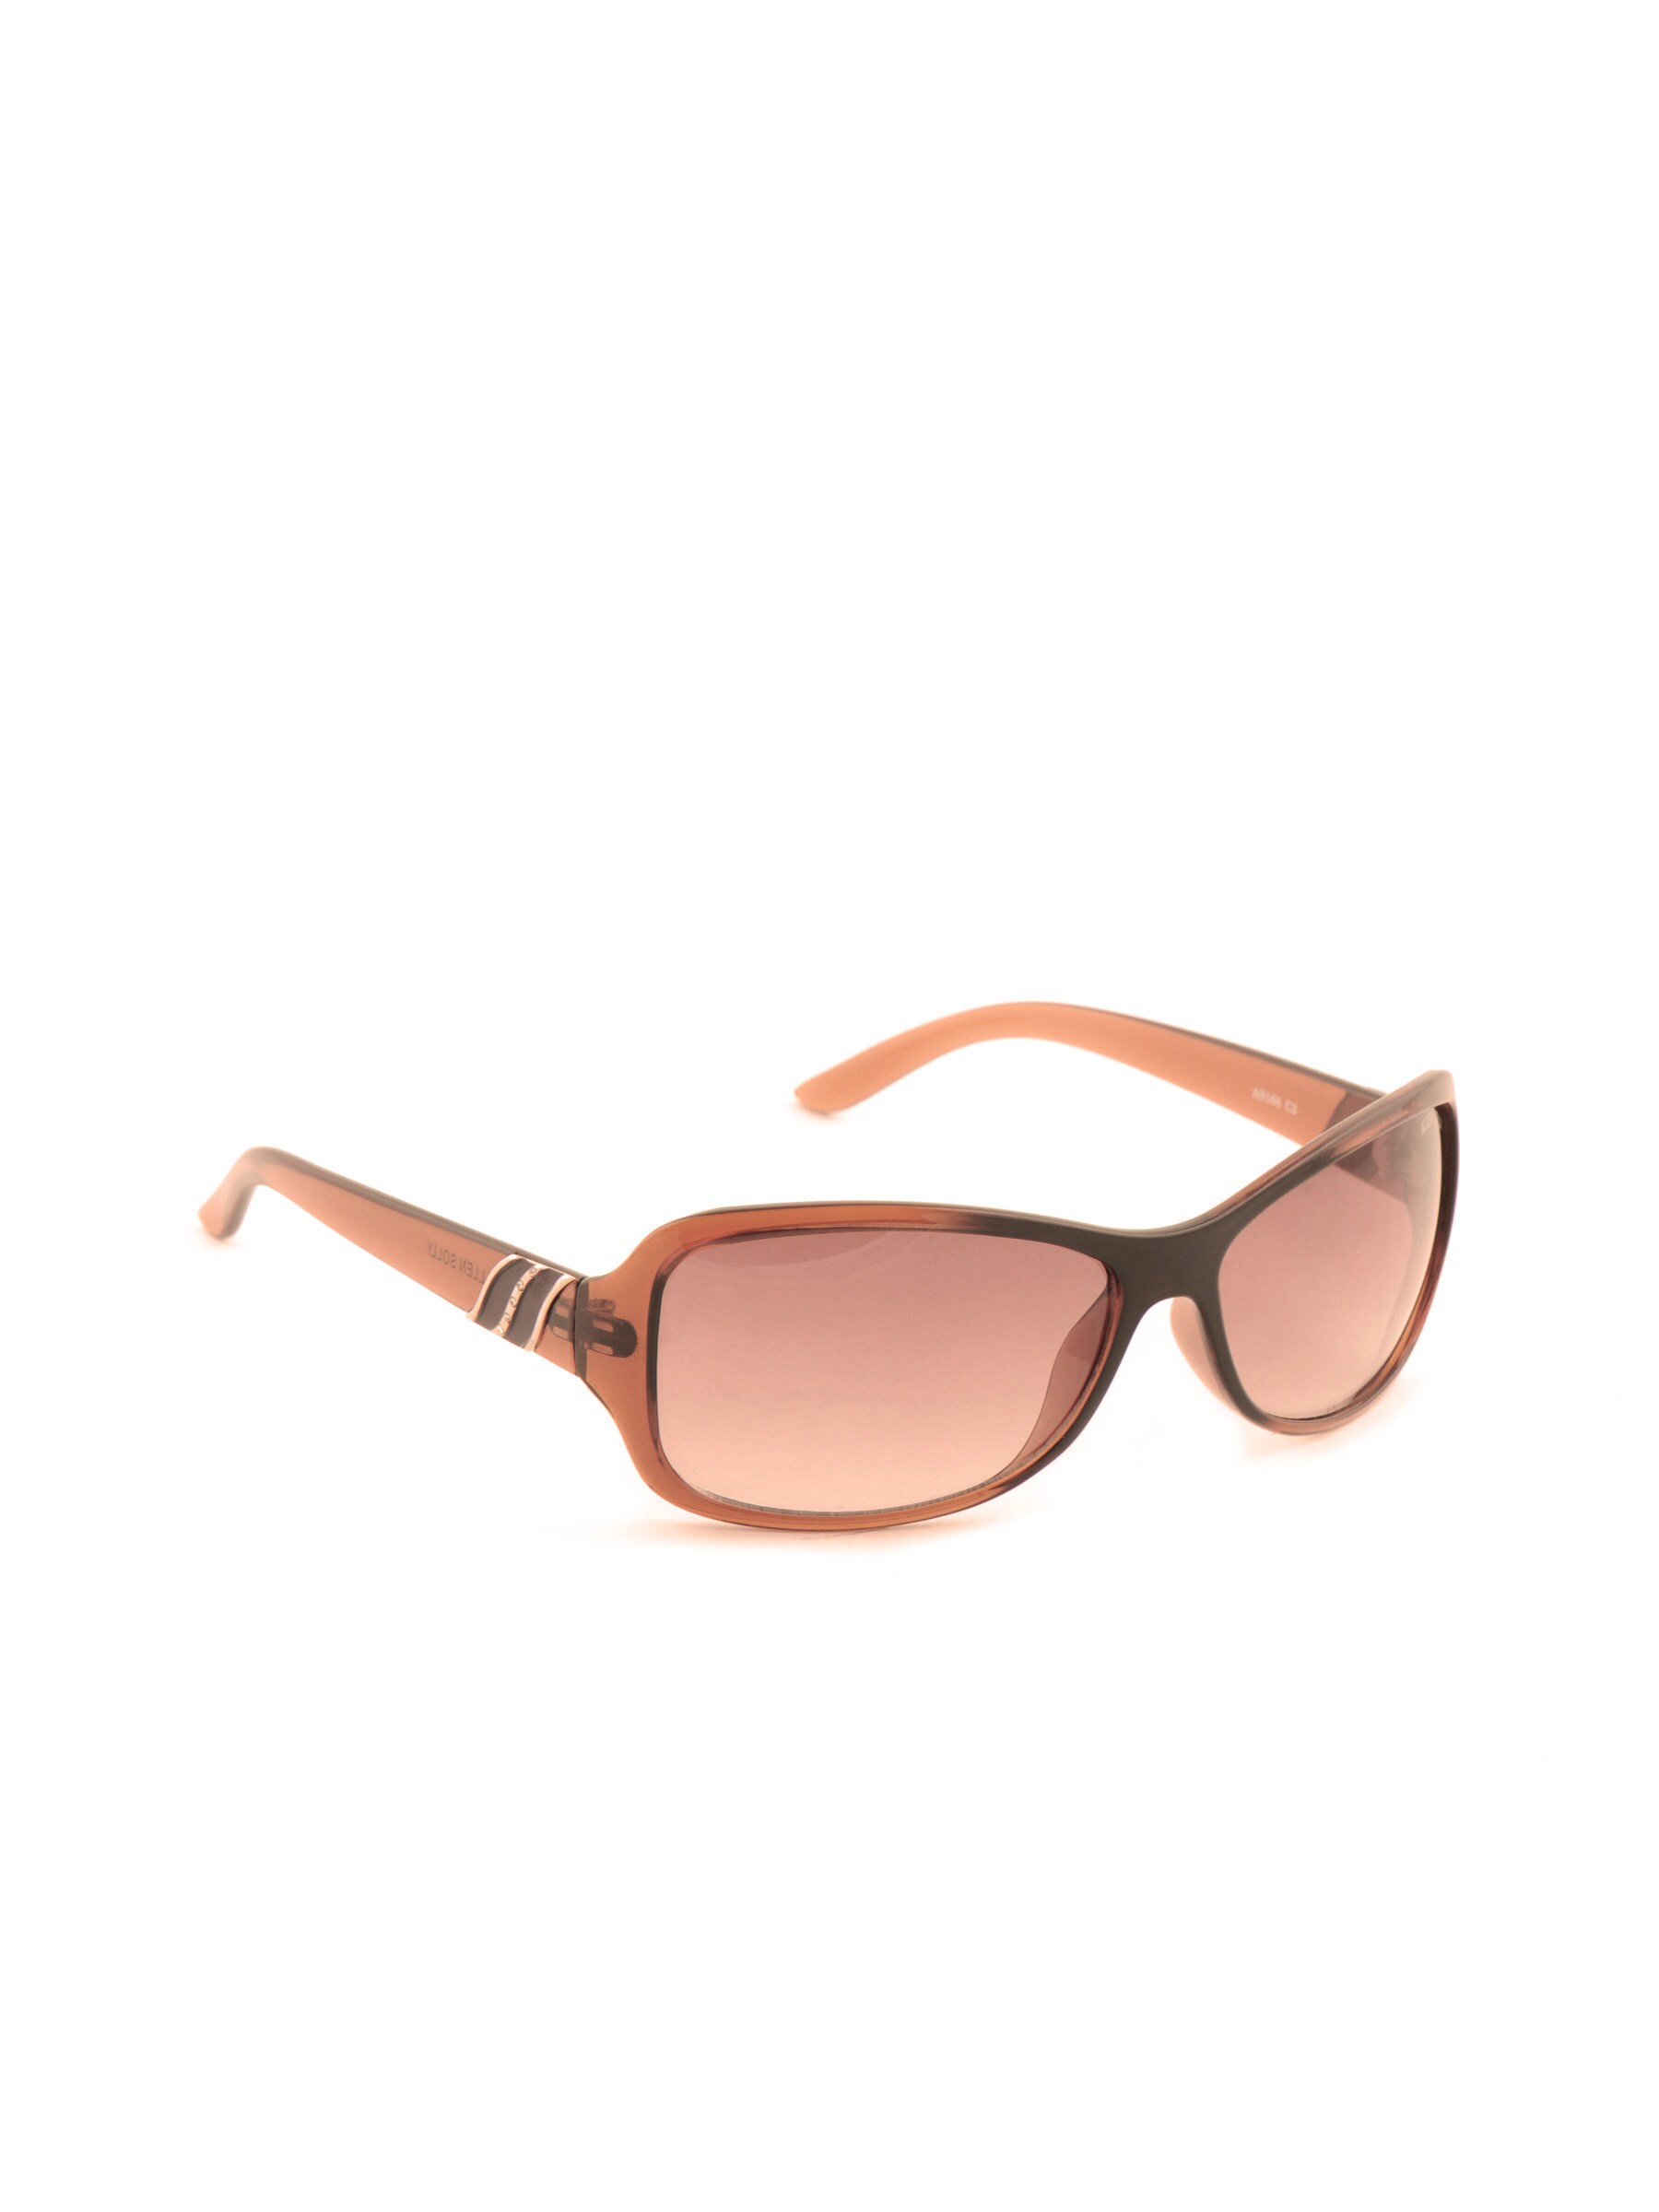 Allen Solly Women Sunglasses AS166-C2